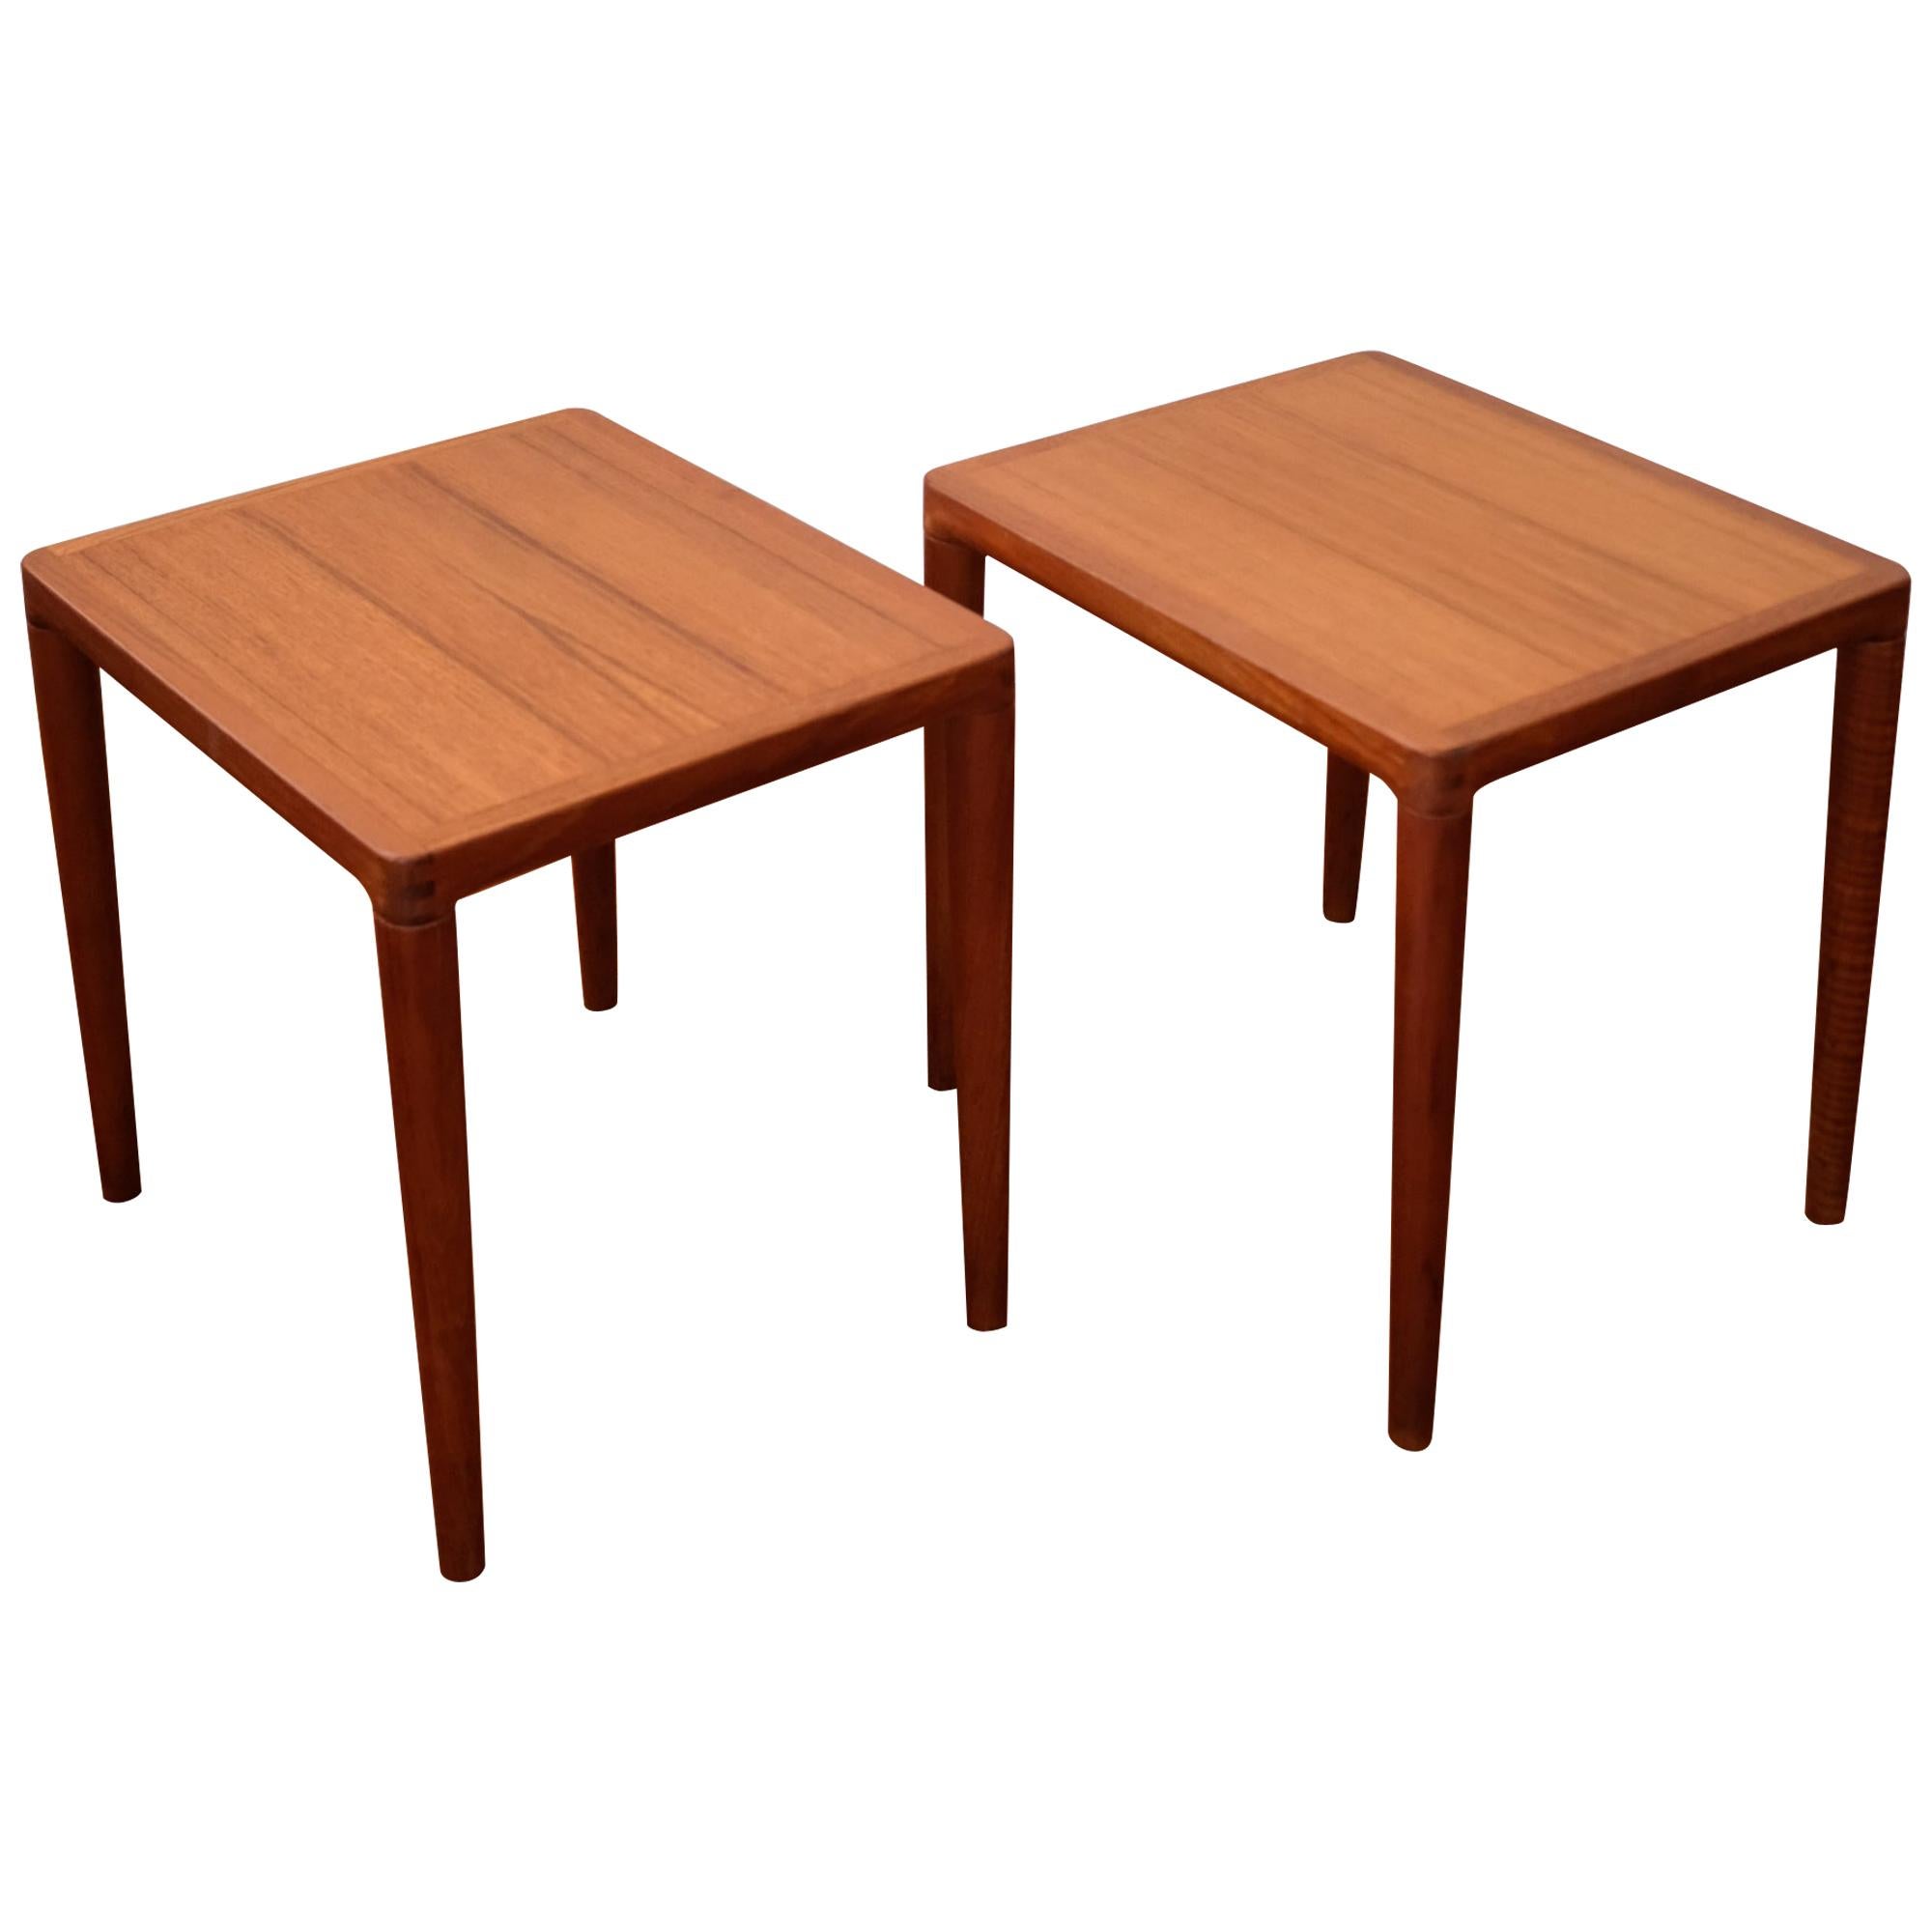 Pair of Teak Side Tables by H. W. Klein